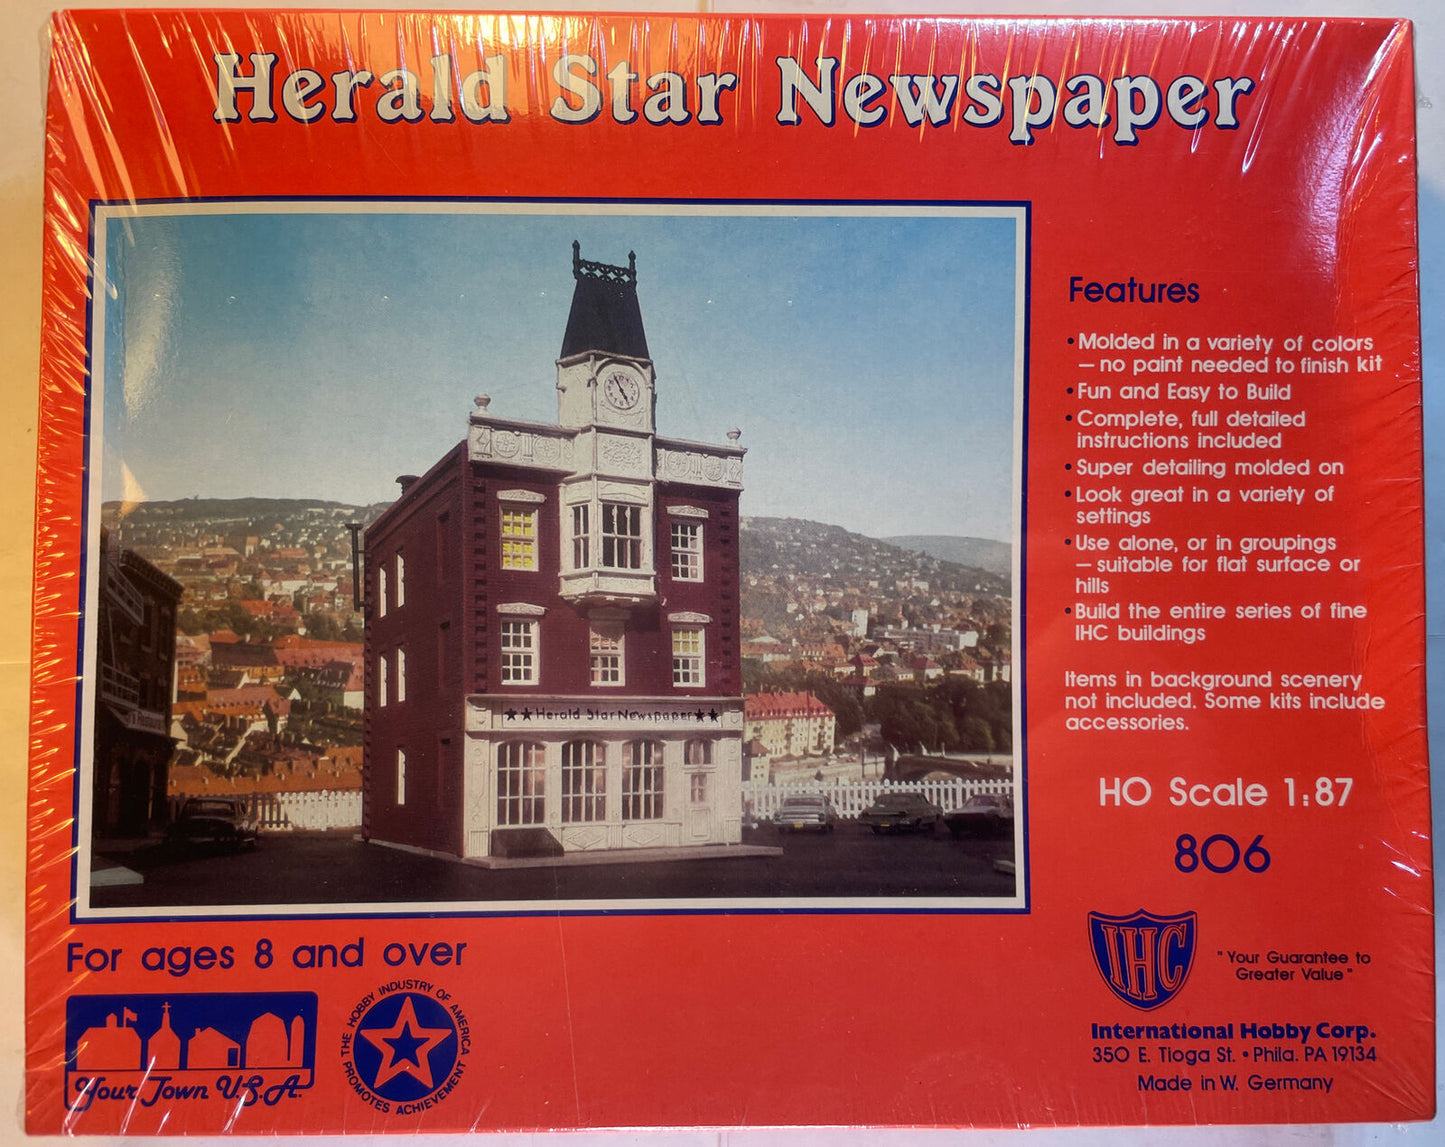 🚂 HO Scale IHC 806 Herald Star Newspaper Brand New / Sealed In Original Box!!